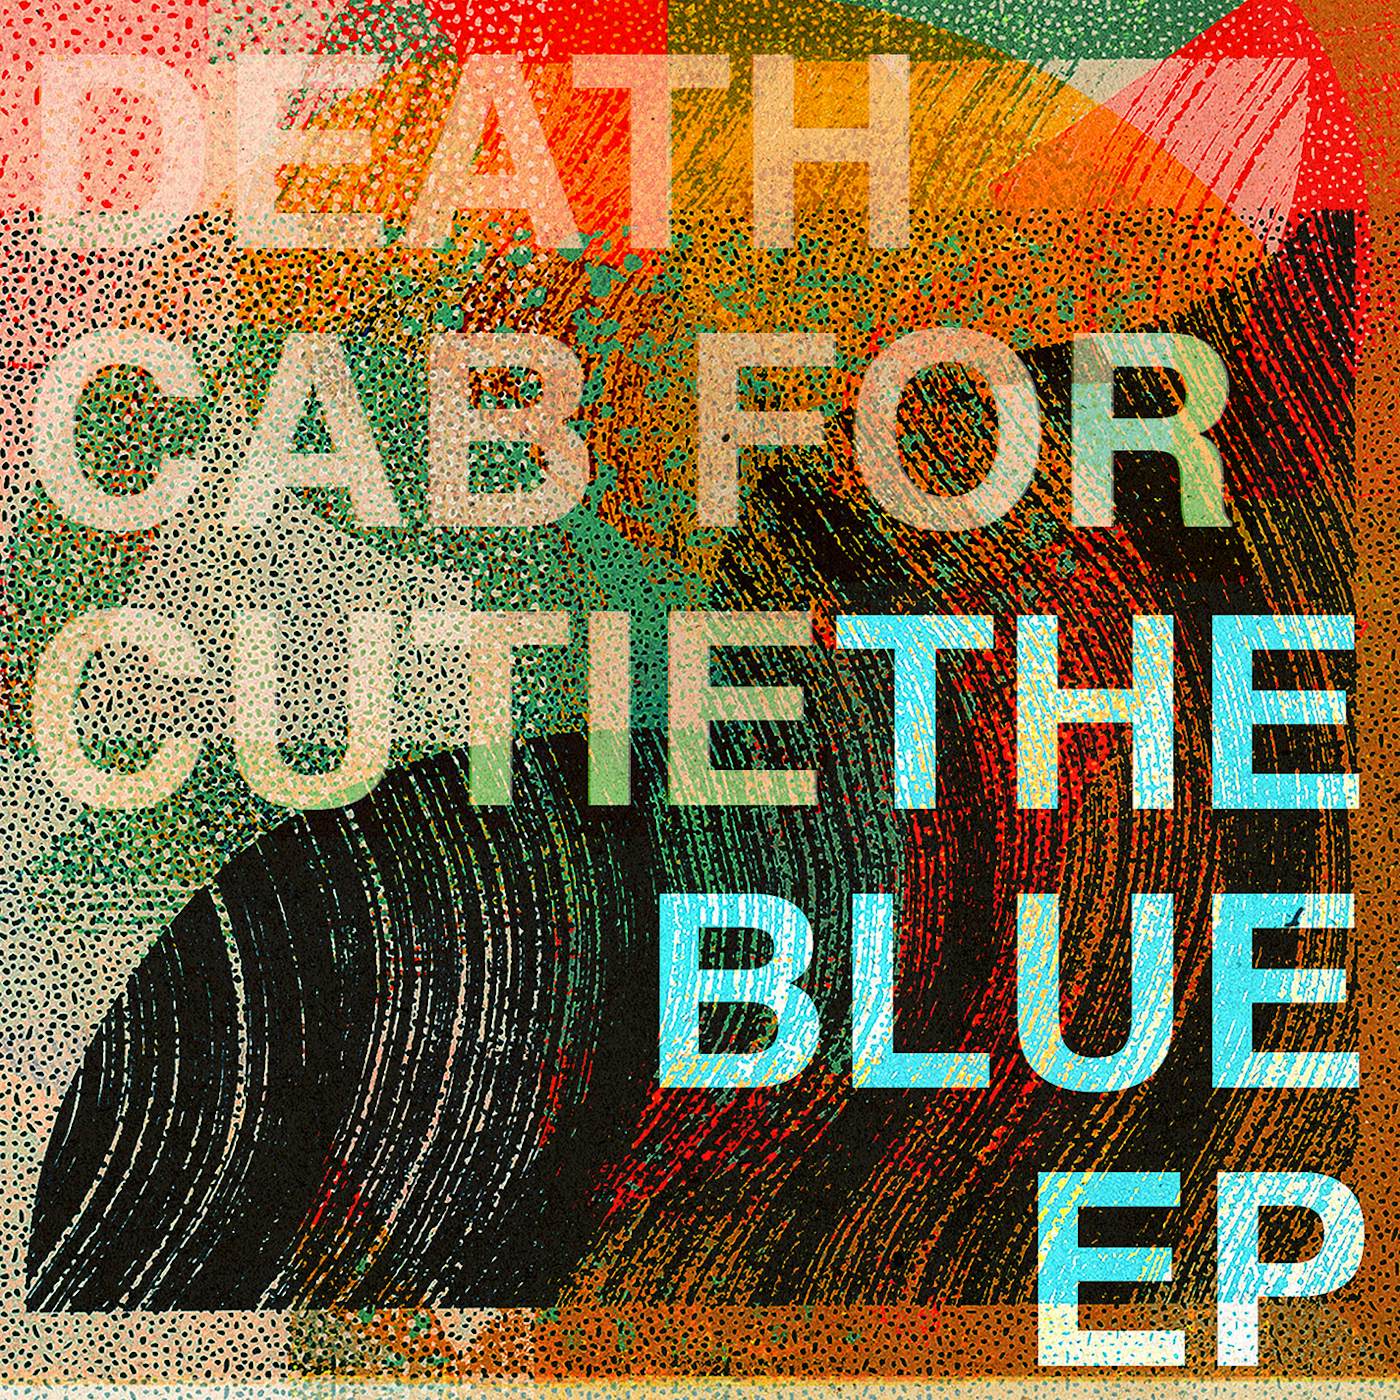 Death Cab for Cutie BLUE CD